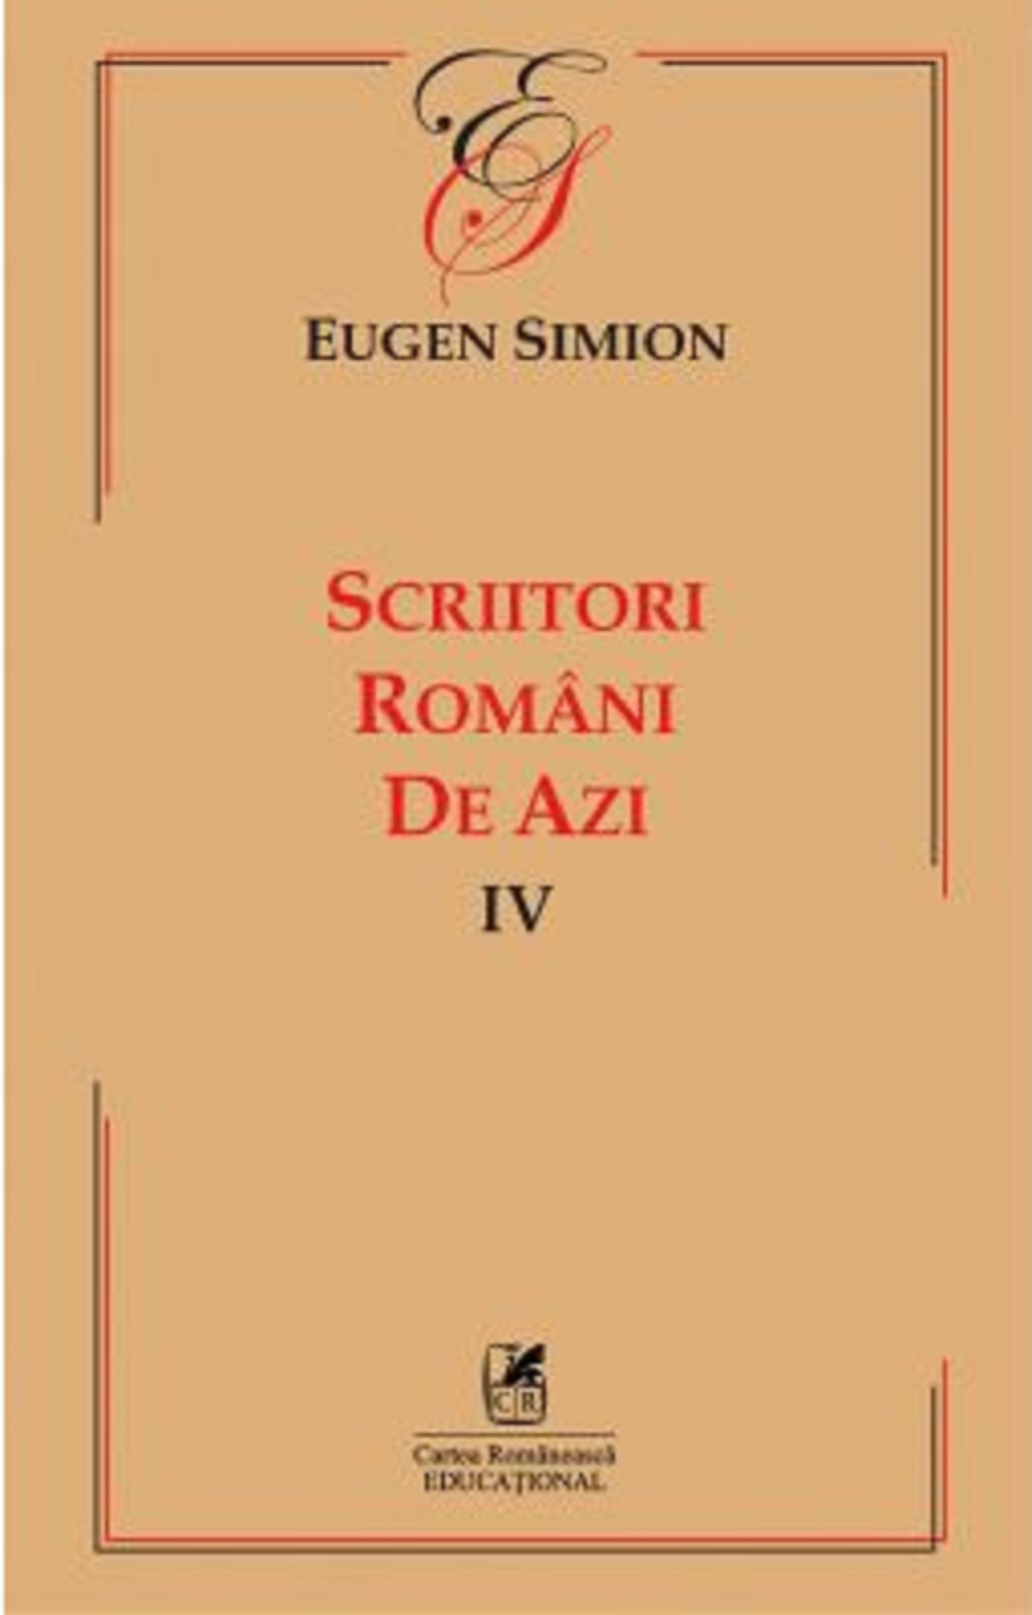 Scriitorii romani de azi IV | Eugen Simion Cartea Romaneasca poza bestsellers.ro